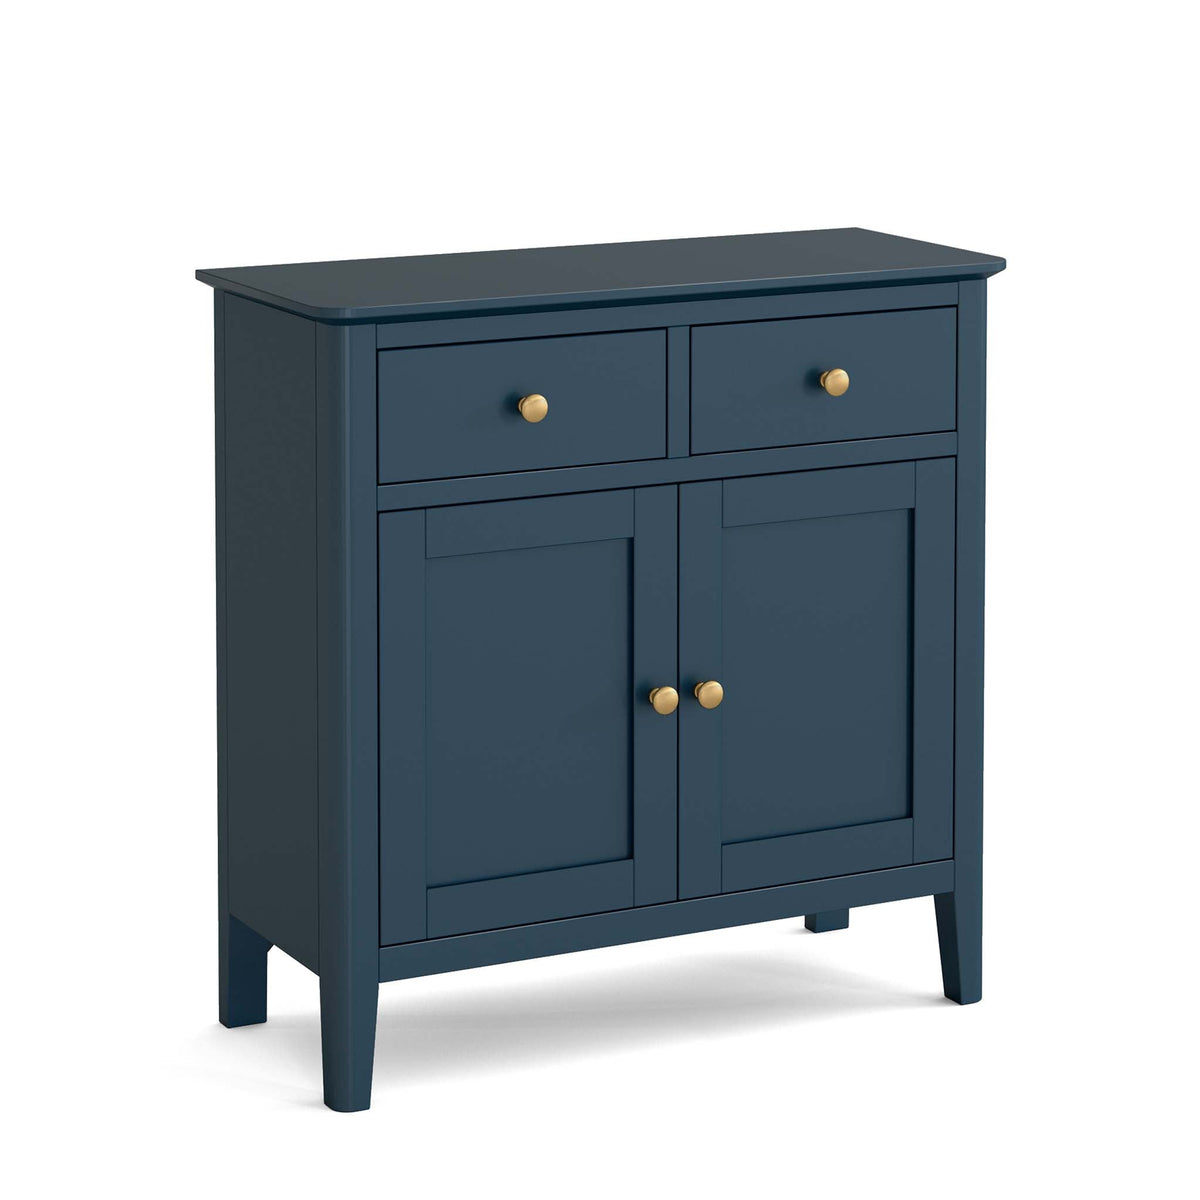 Stirling Blue Mini Sideboard Cabinet from Roseland Furniture